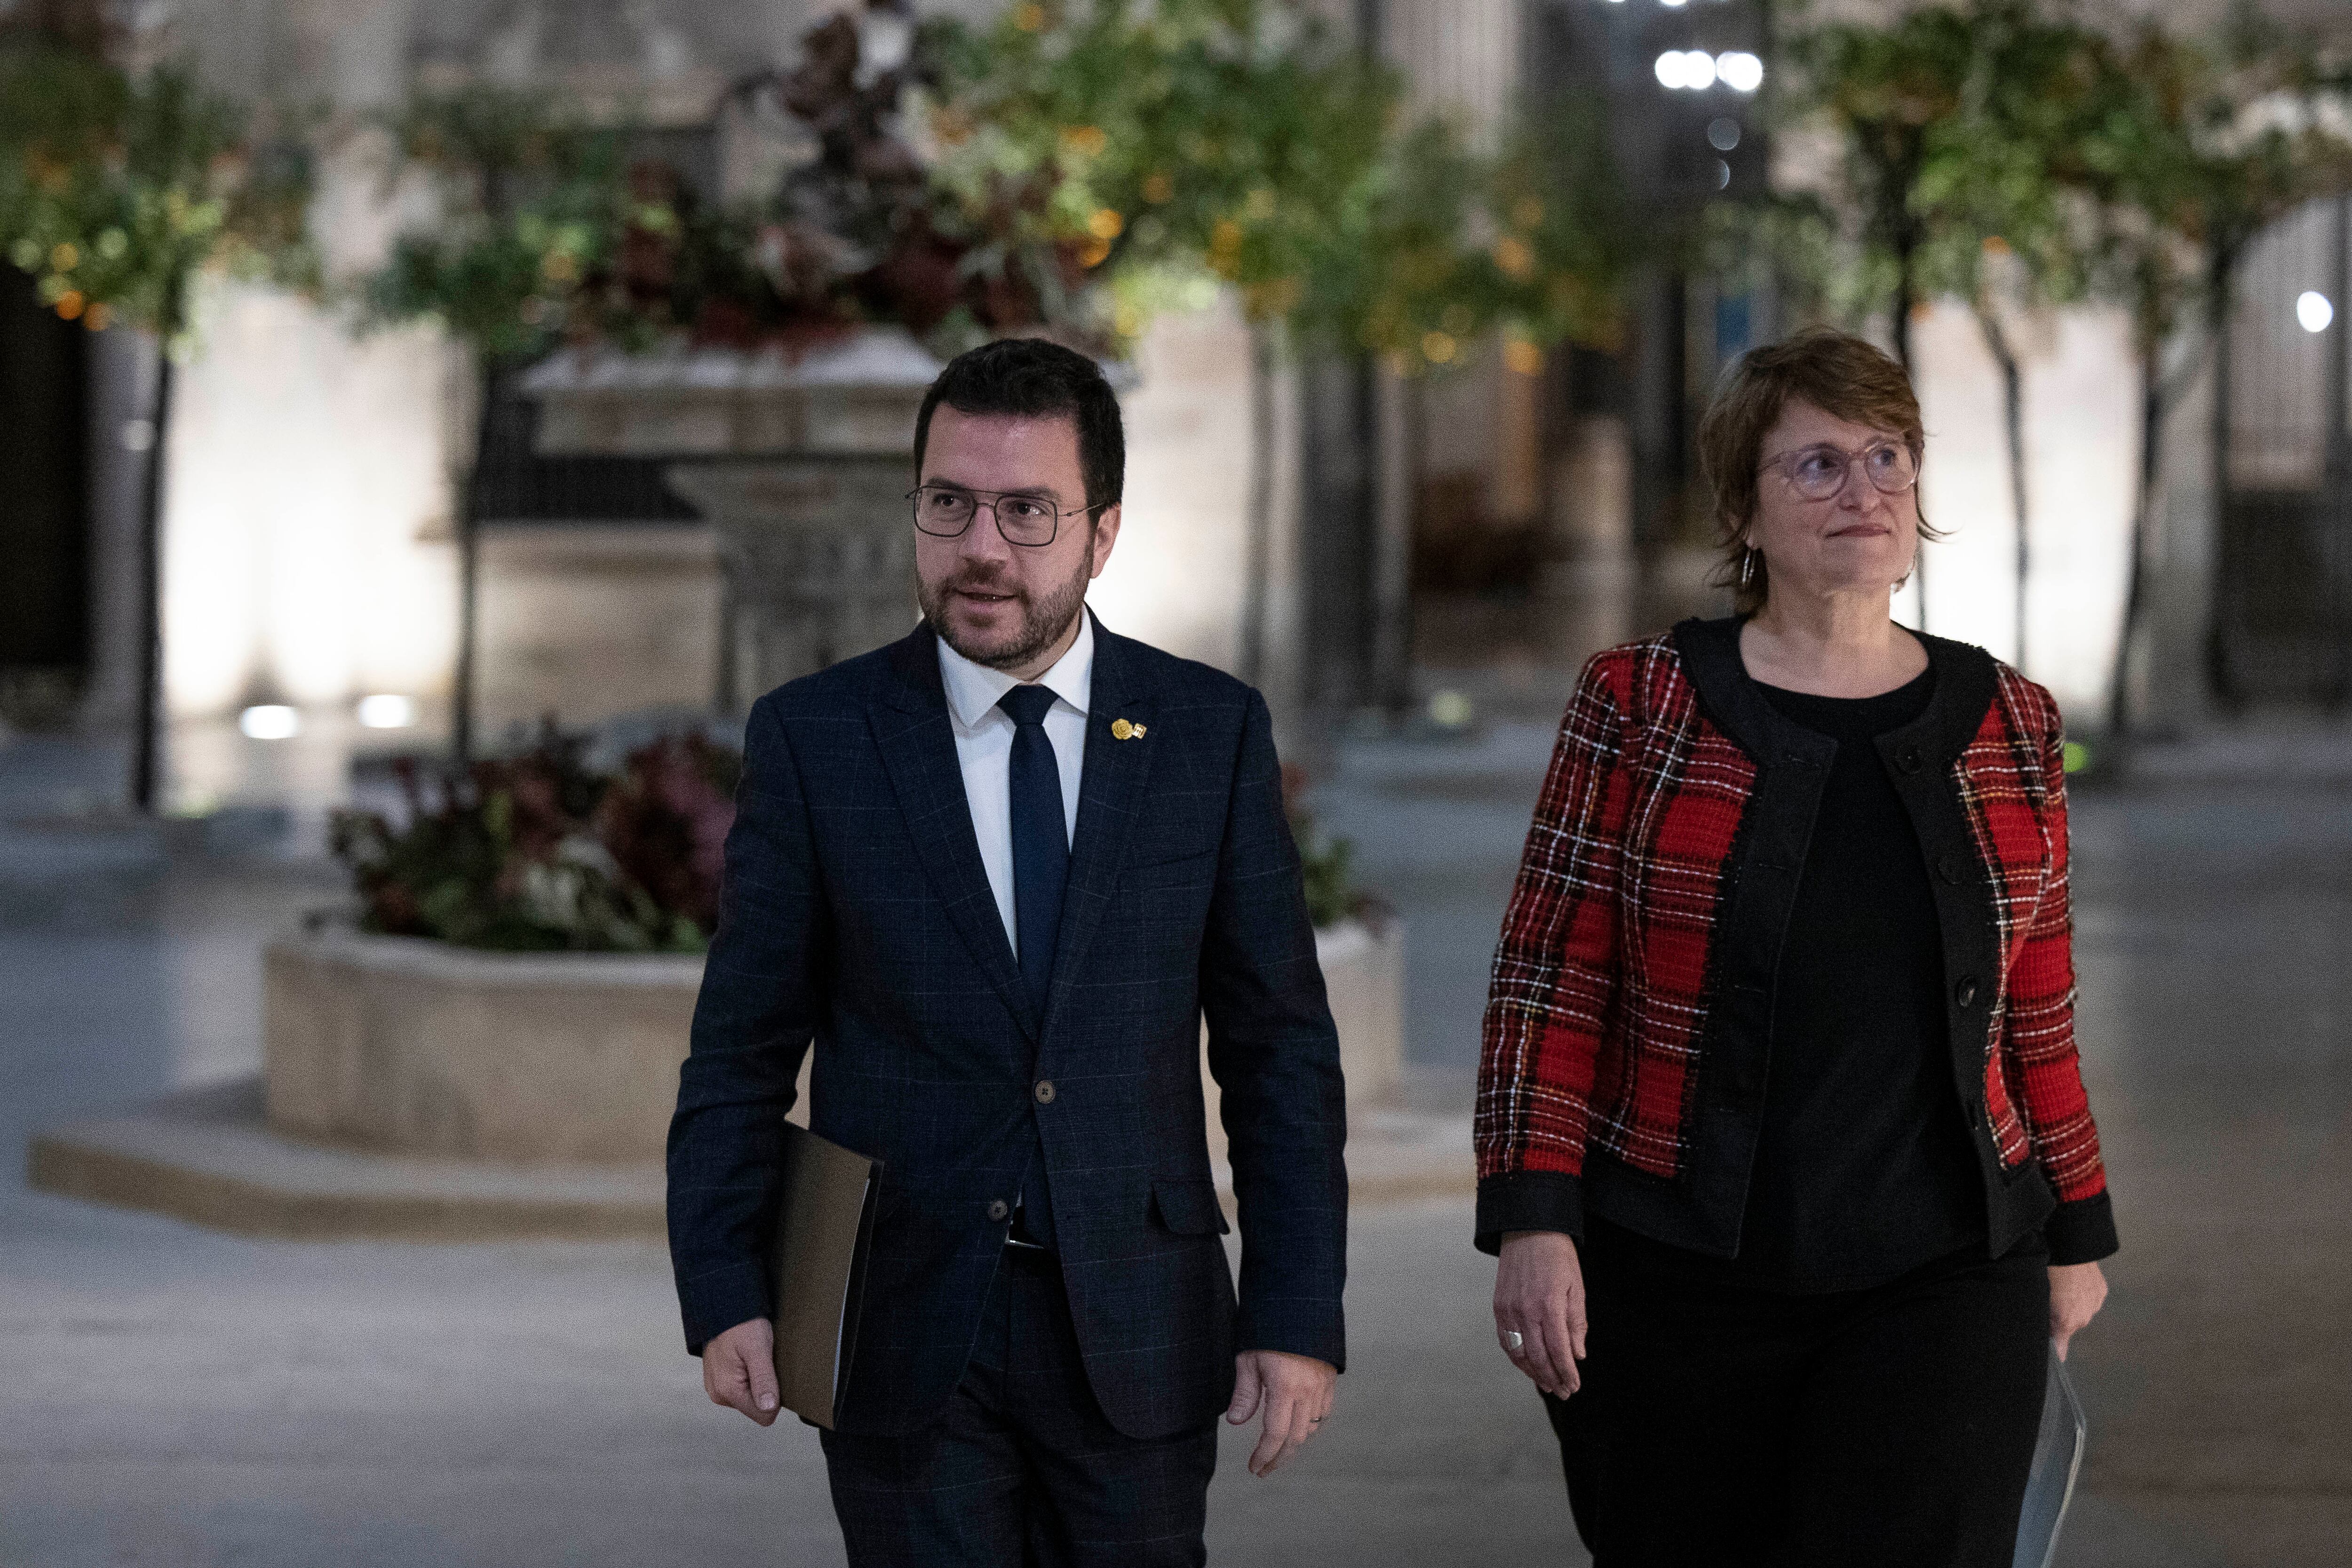 El president Pere Aragonès y la consejera Anna Simó, a su llegada a la reunión.